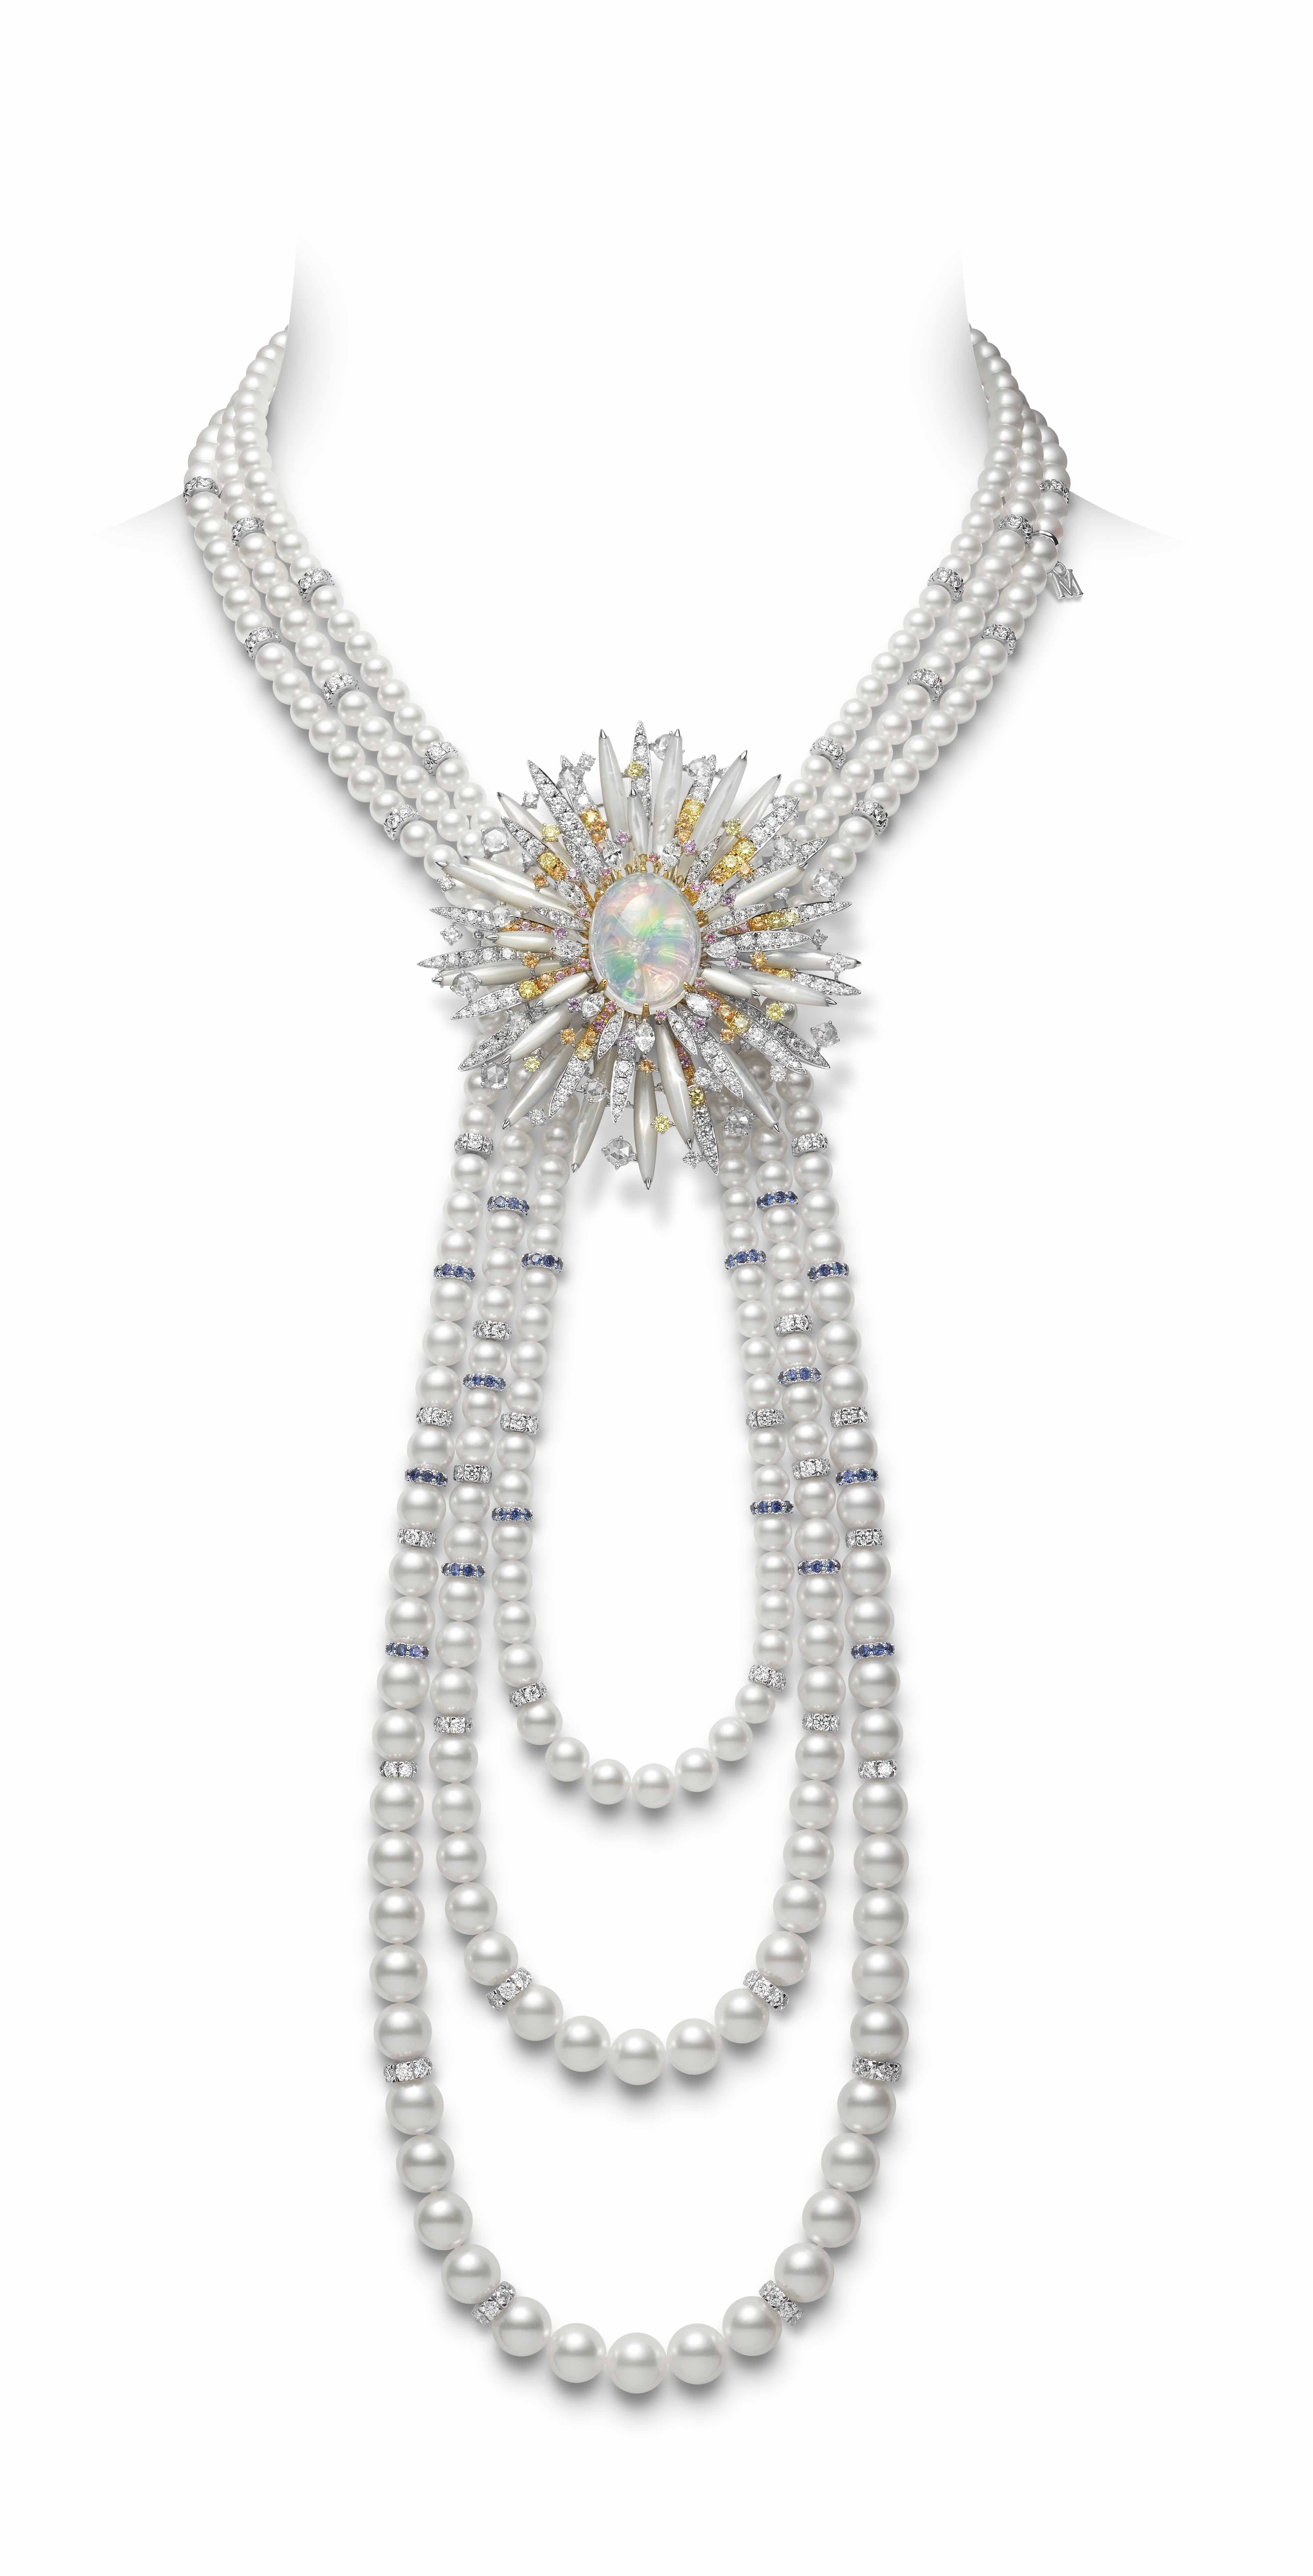 MIKIMOTO顶级珠宝系列「Praise to the Sea」海胆造型蛋白石胸针珍珠串炼，胸针，672万元；项链，308万元。图／MIKIMOTO提供